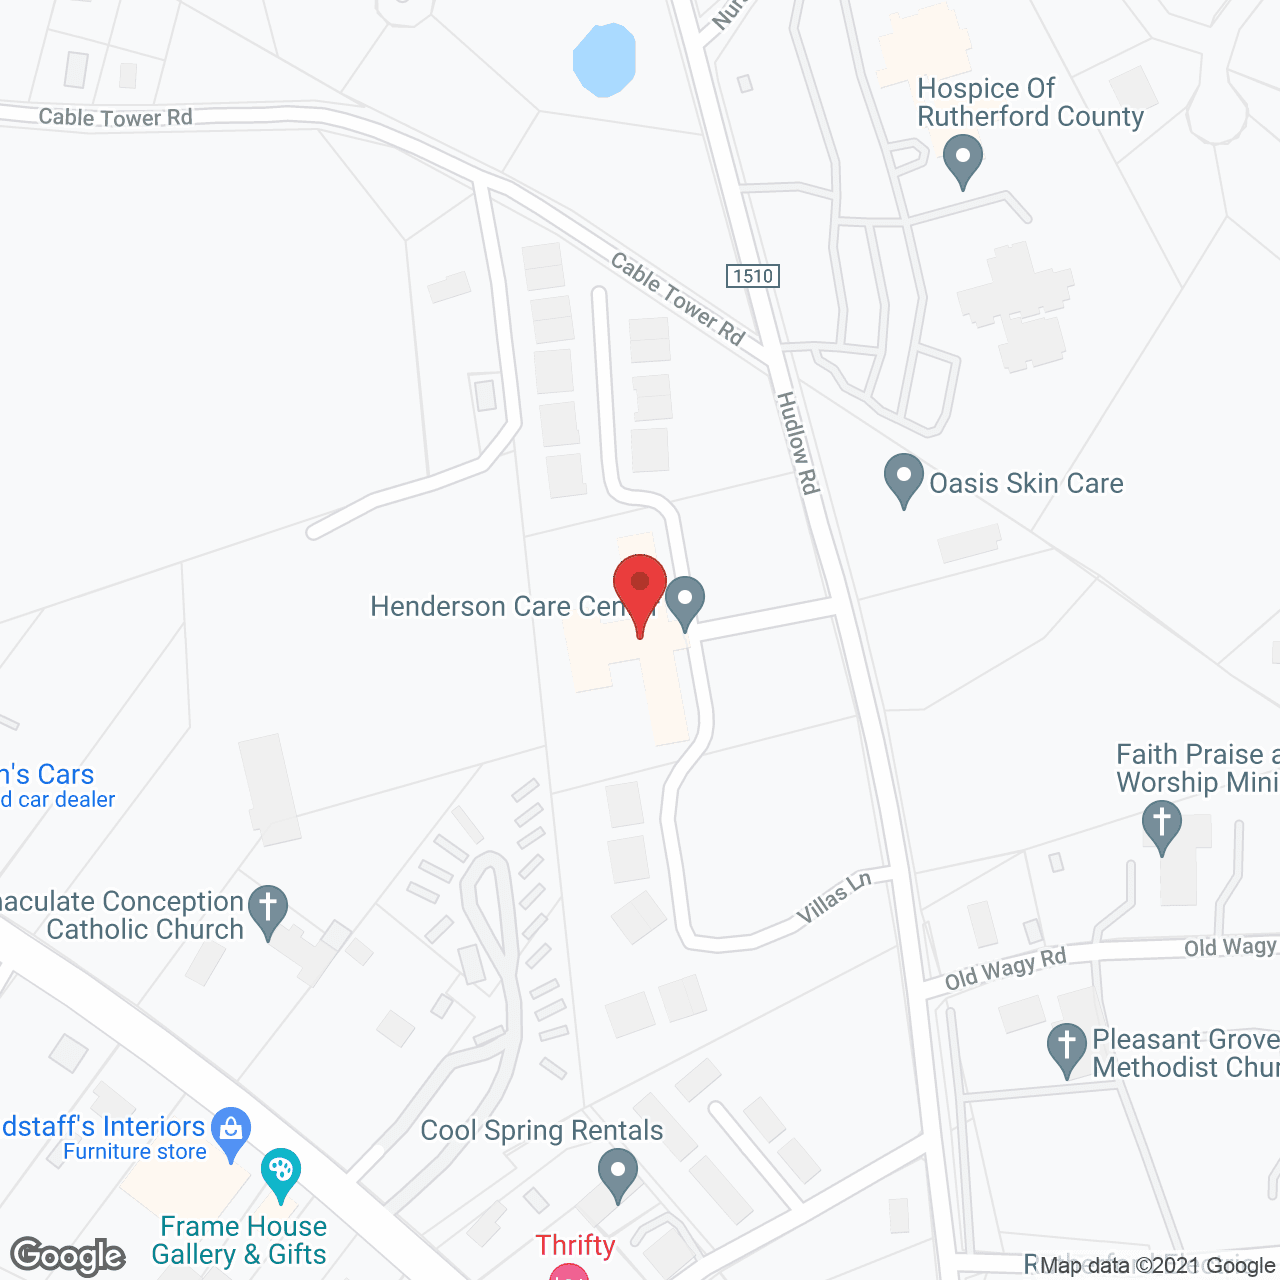 Henderson Care Center in google map